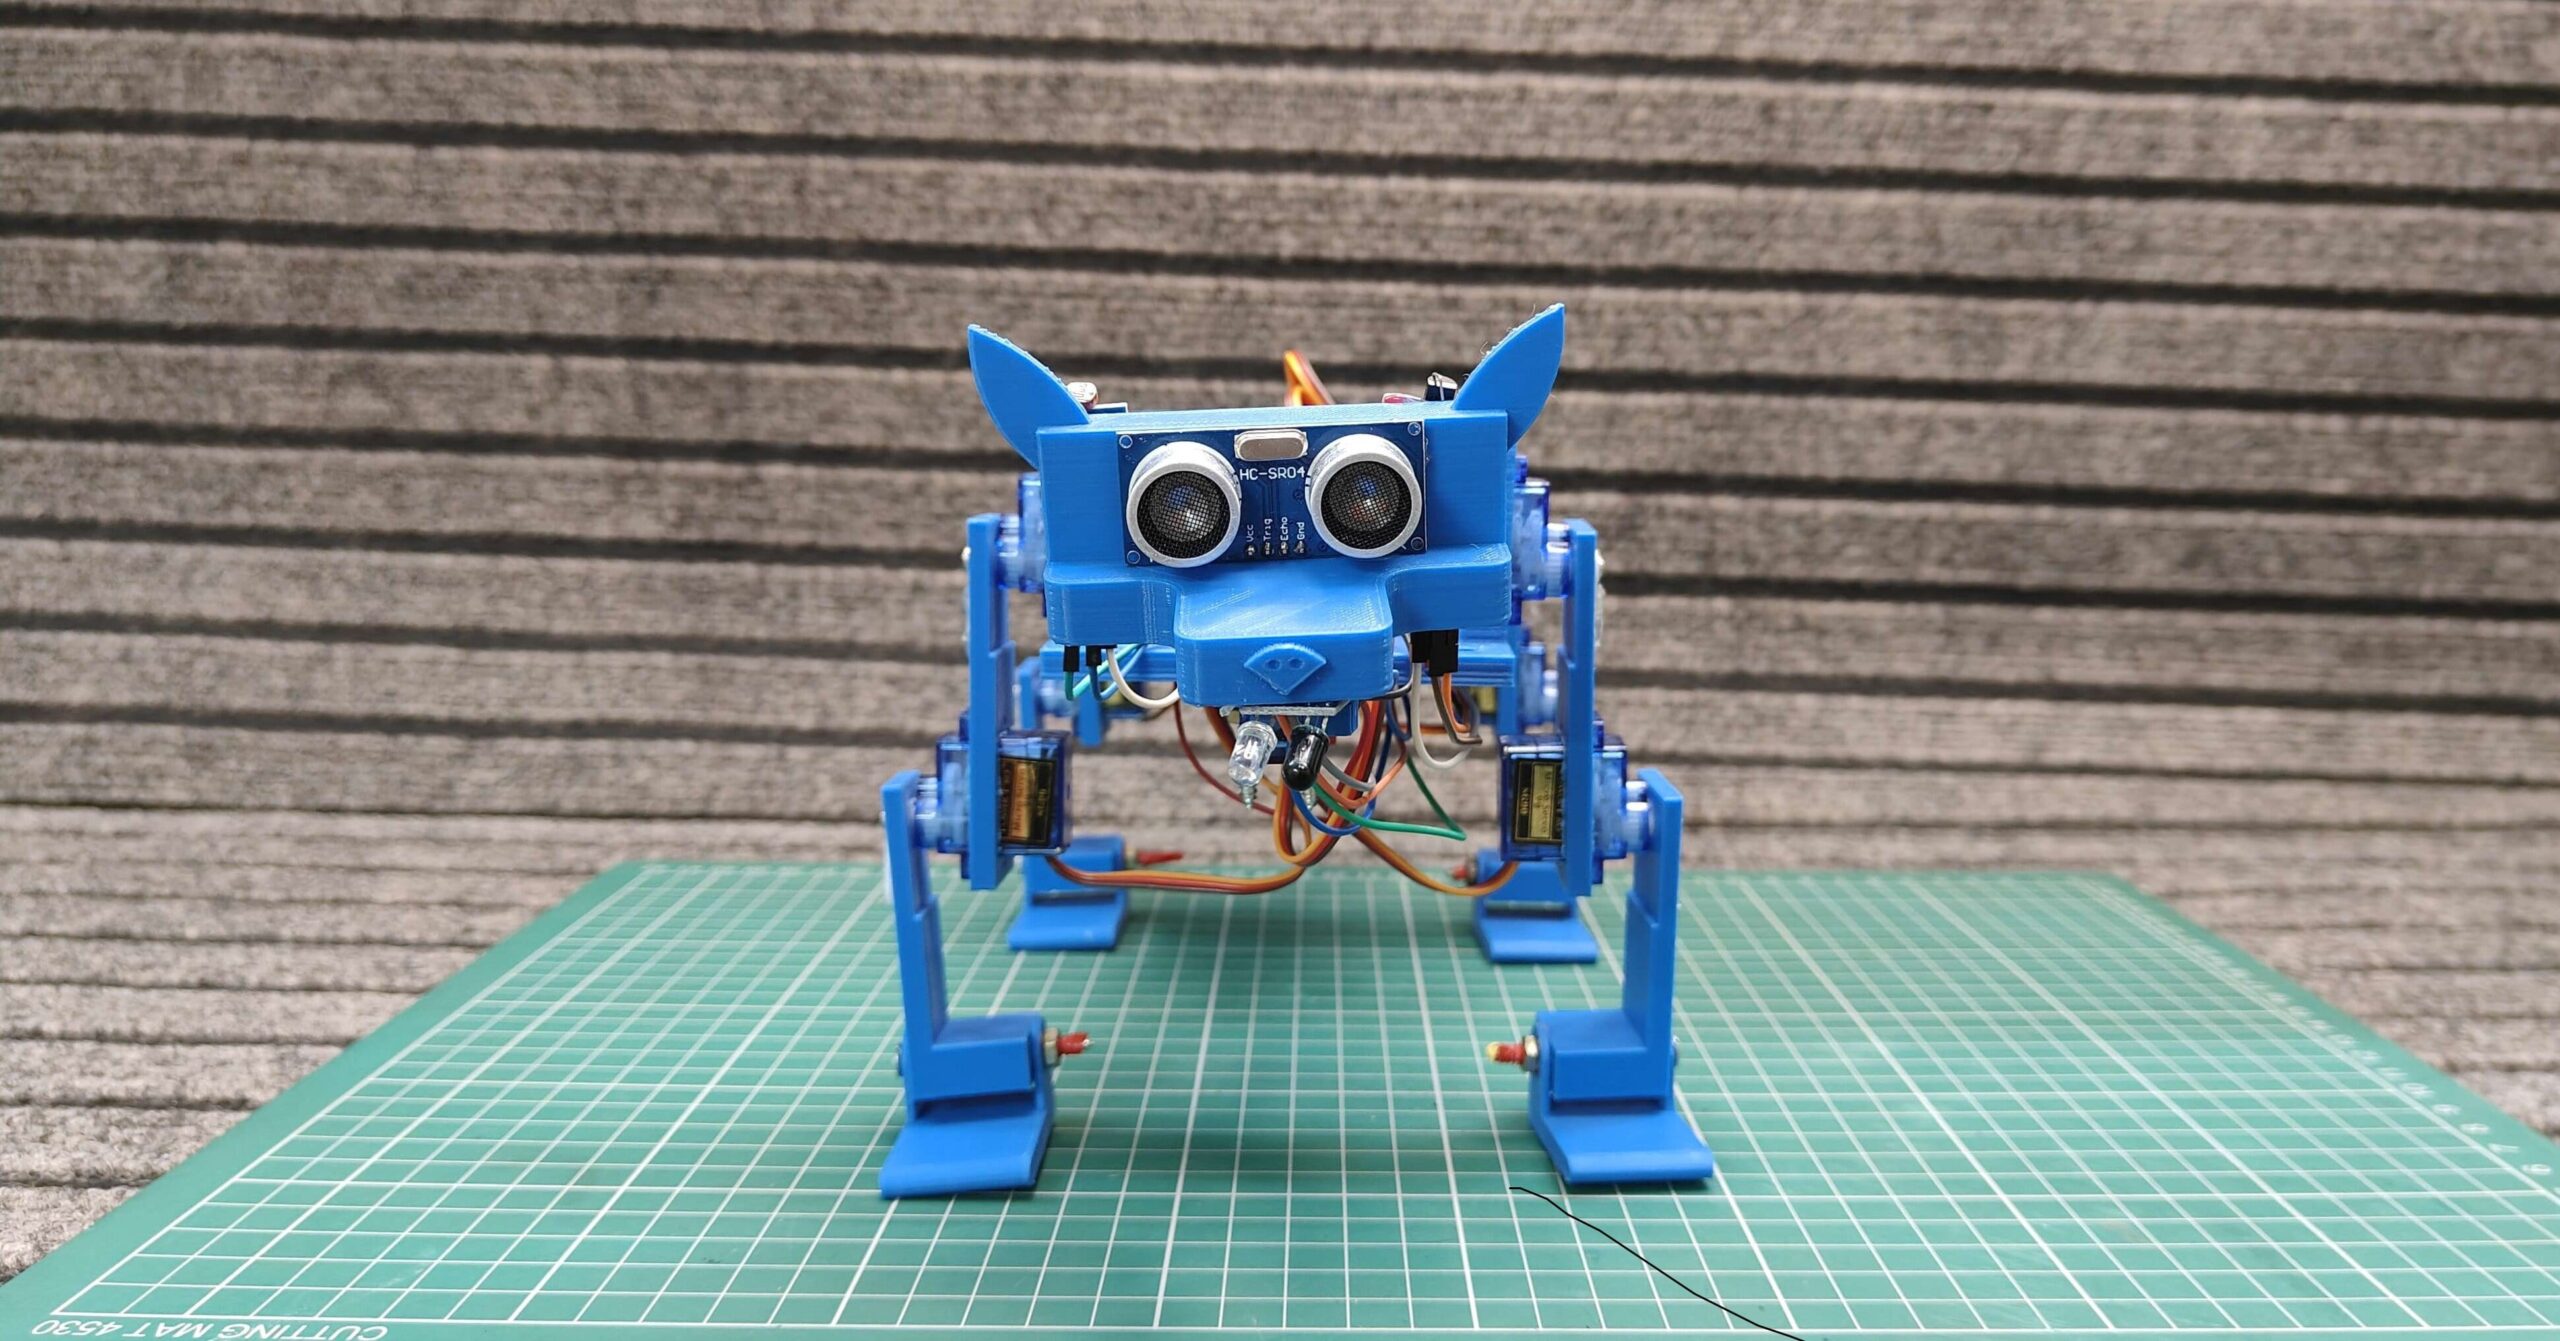 Robot Dog EtechRobot